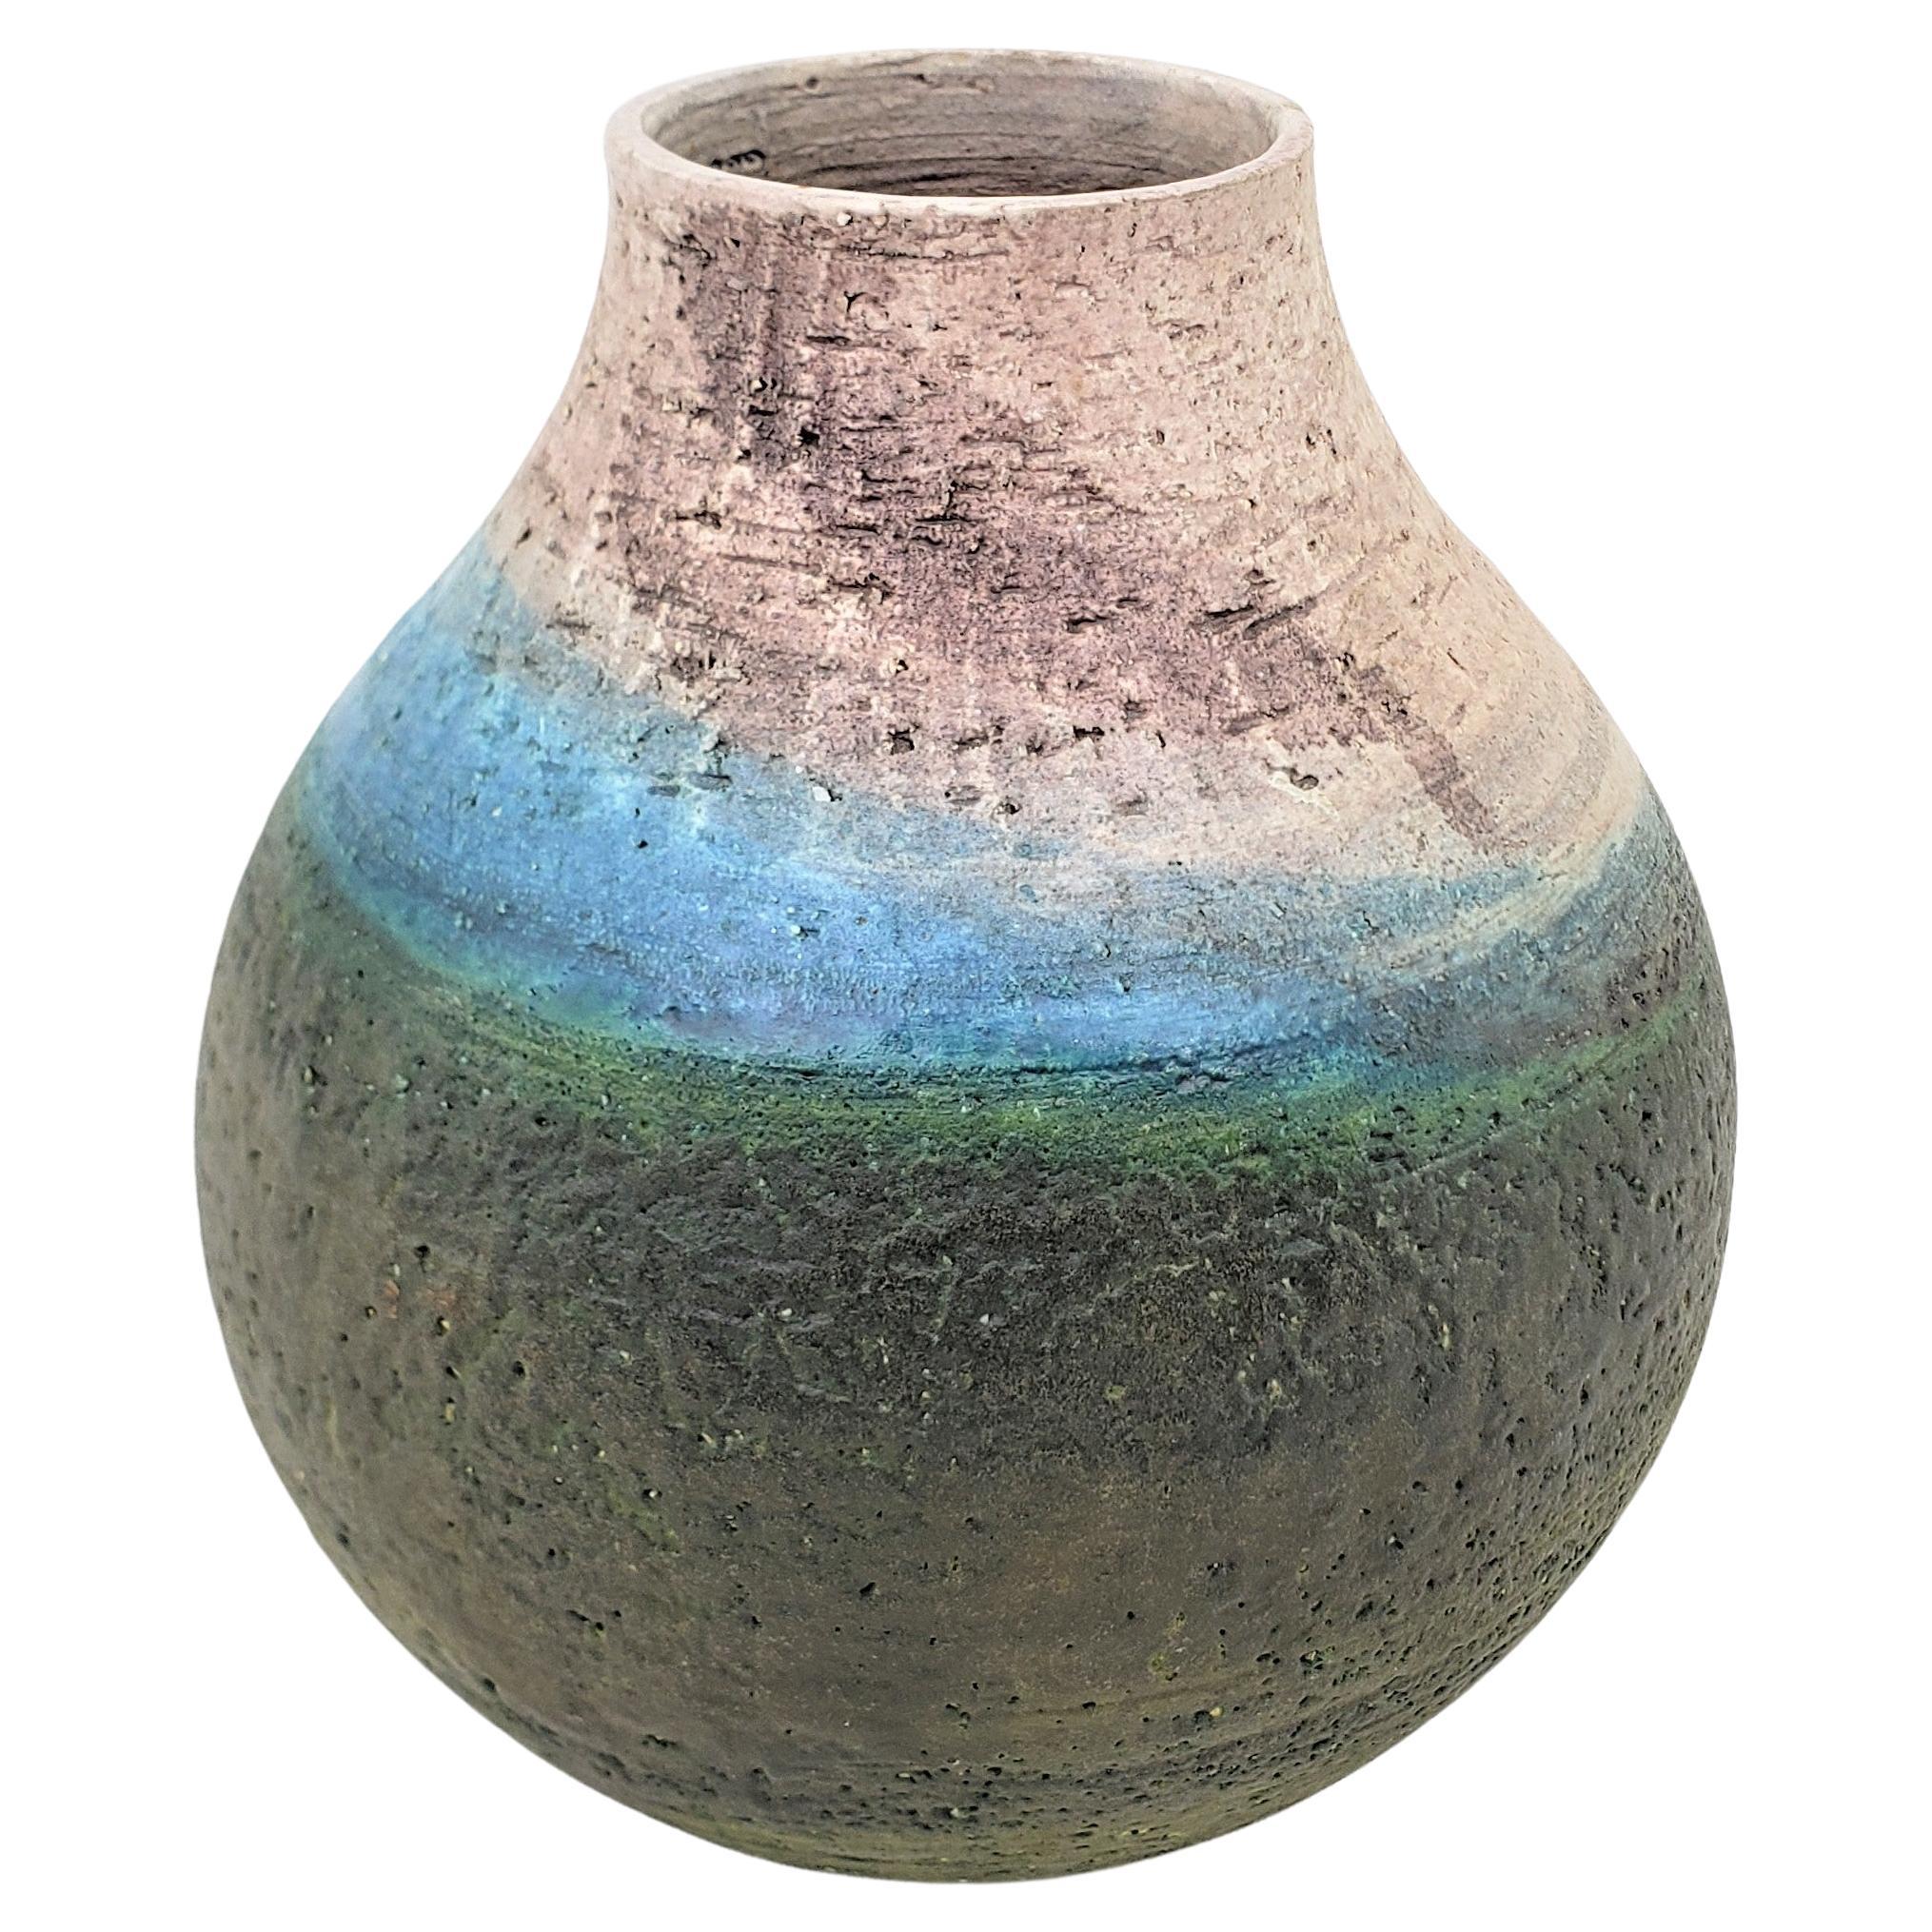 Marcello Fantoni Mid-Century Modern Drip Glaze Art Pottery Vase